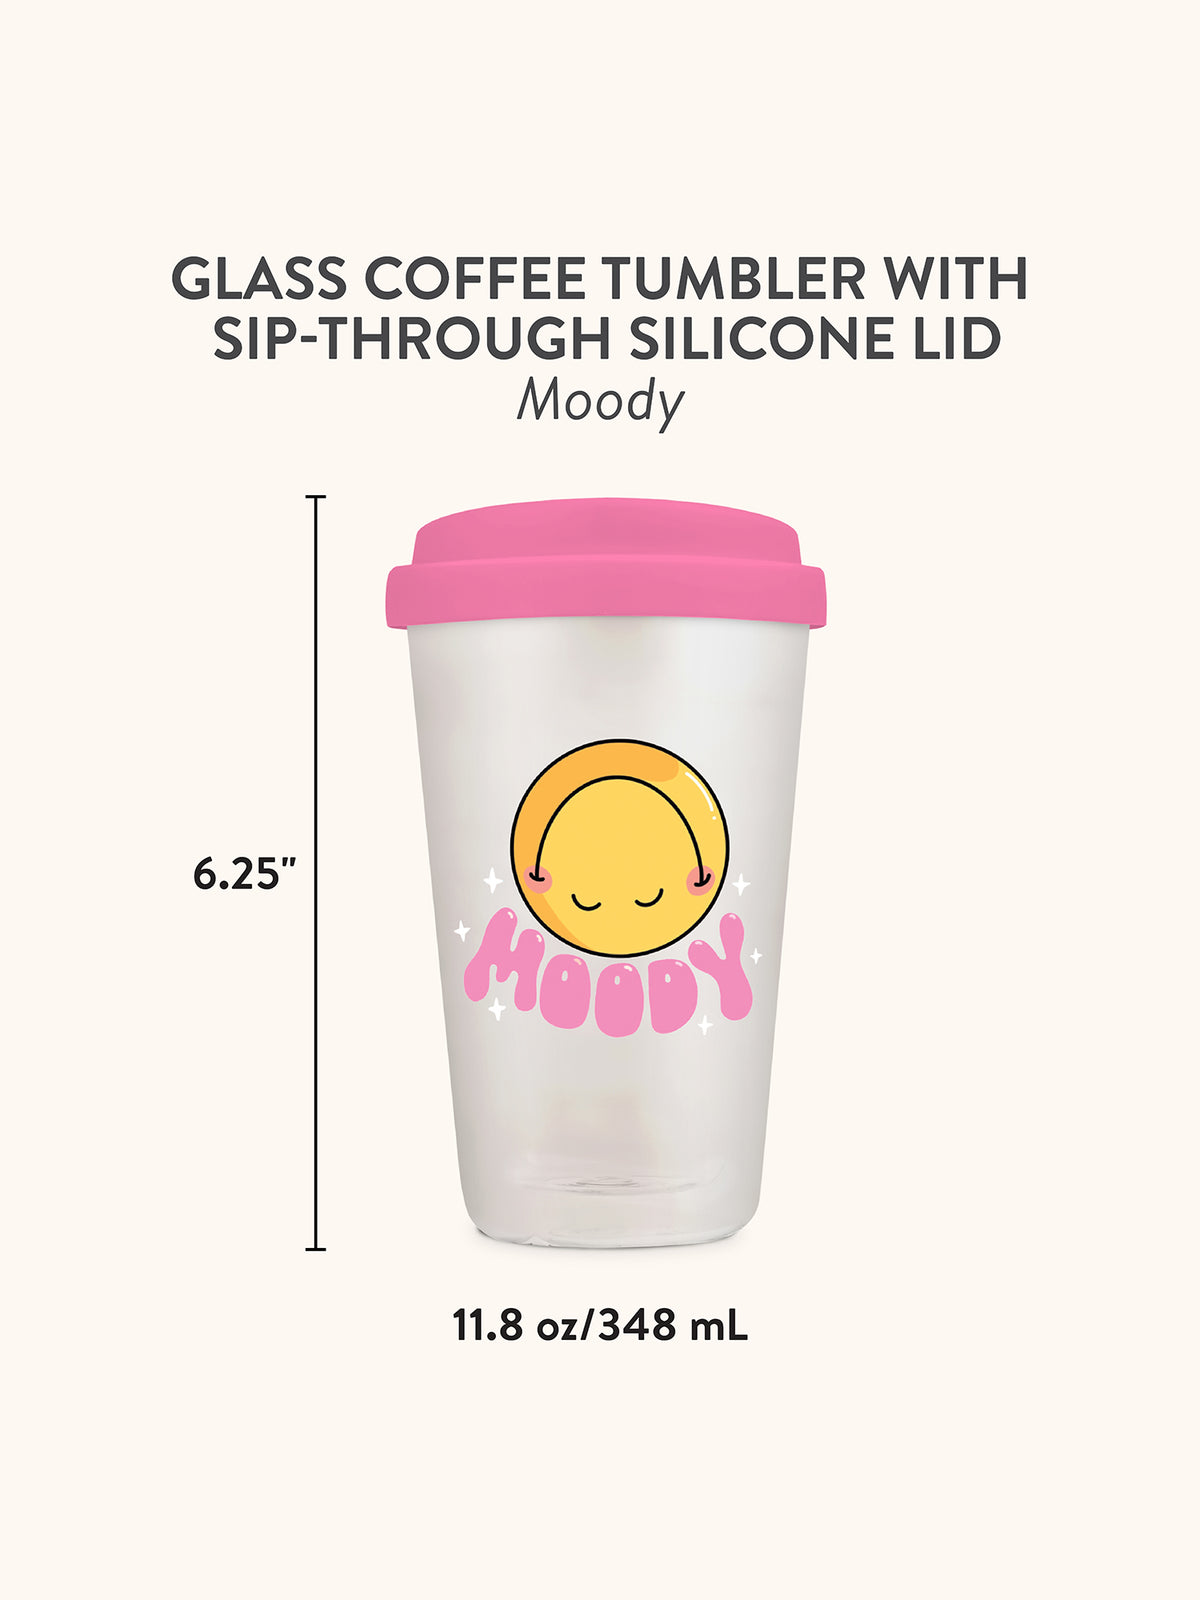 Moody Glass Coffee Tumbler